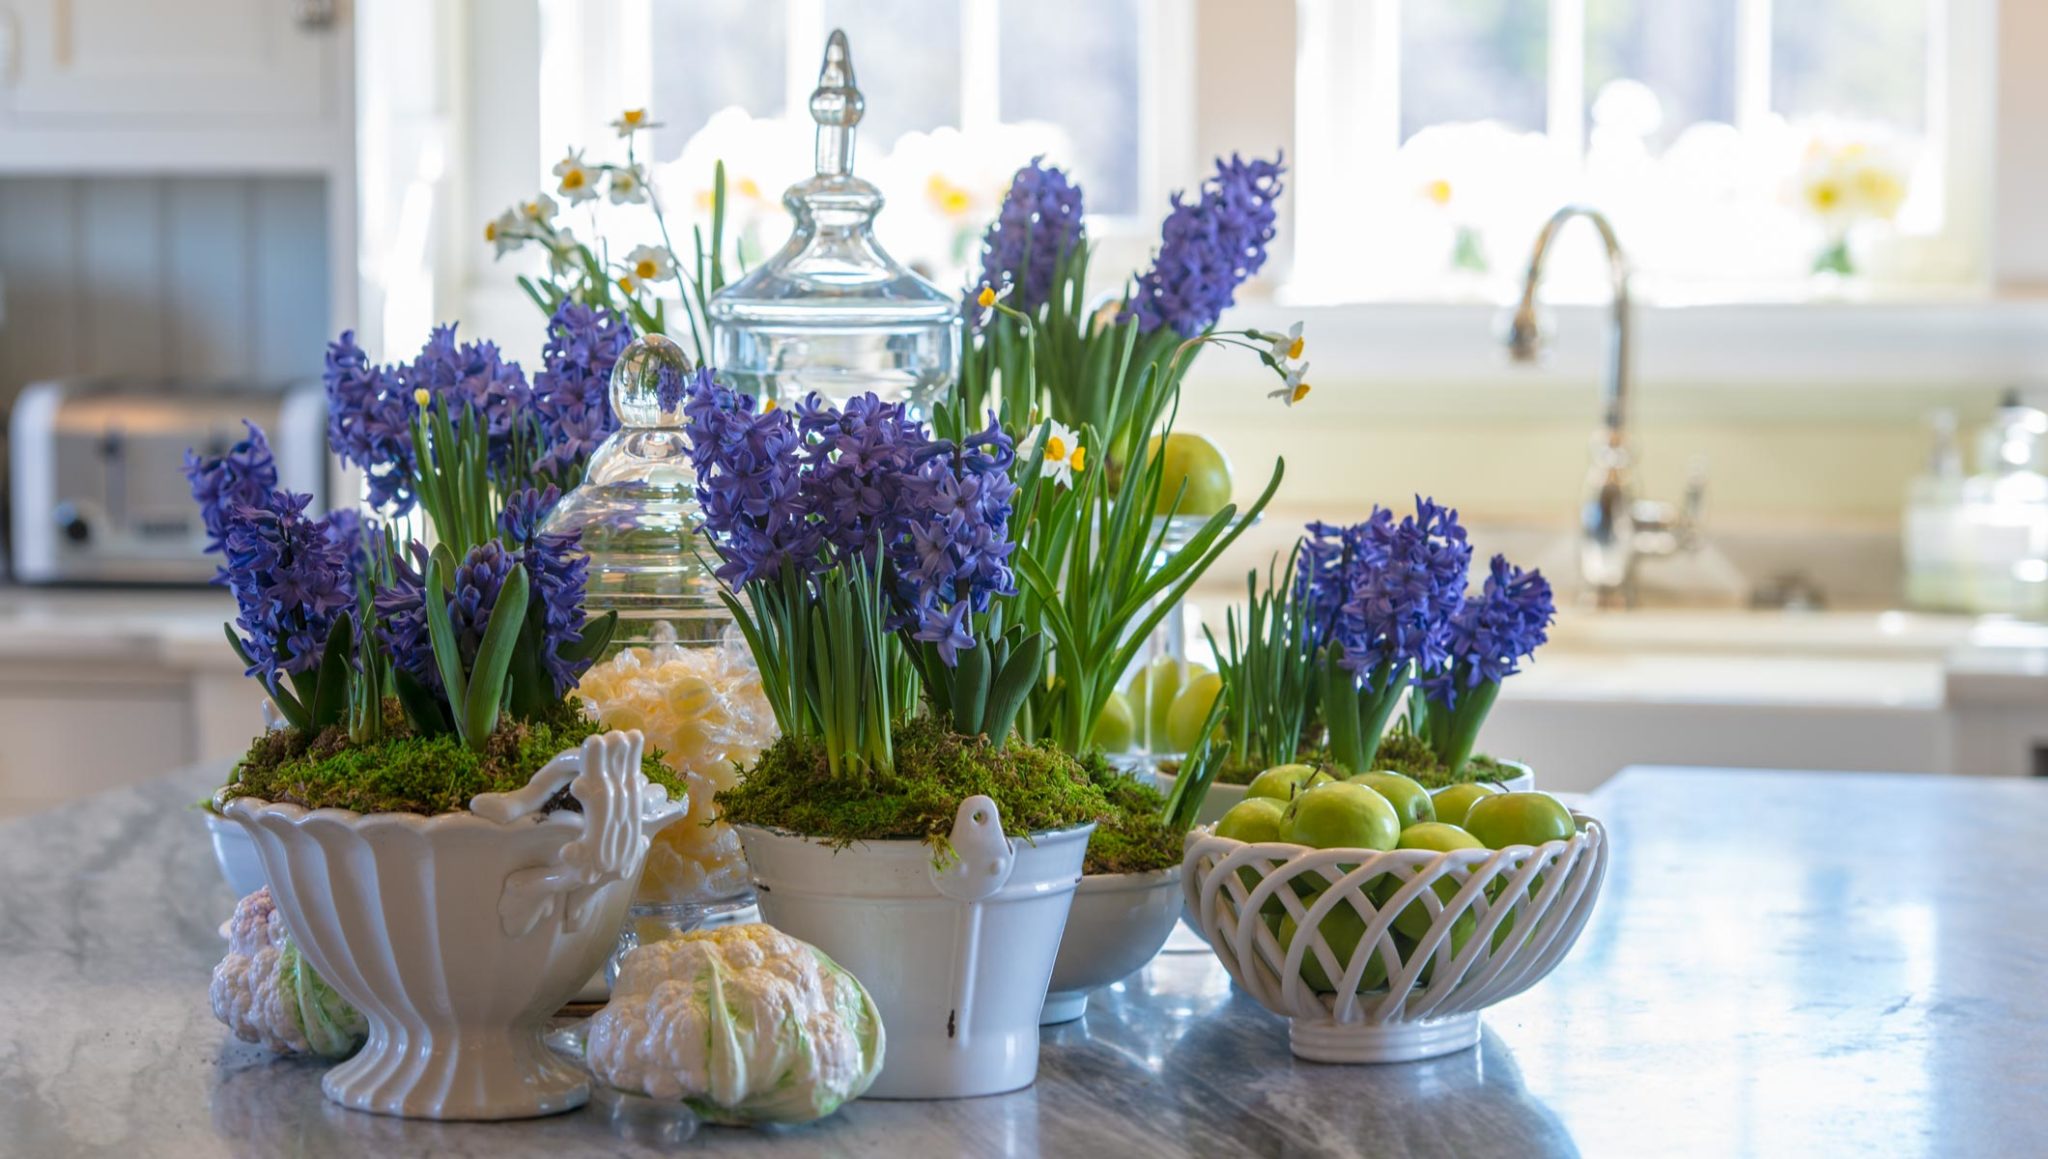 When do you plant hyacinth bulbs indoors